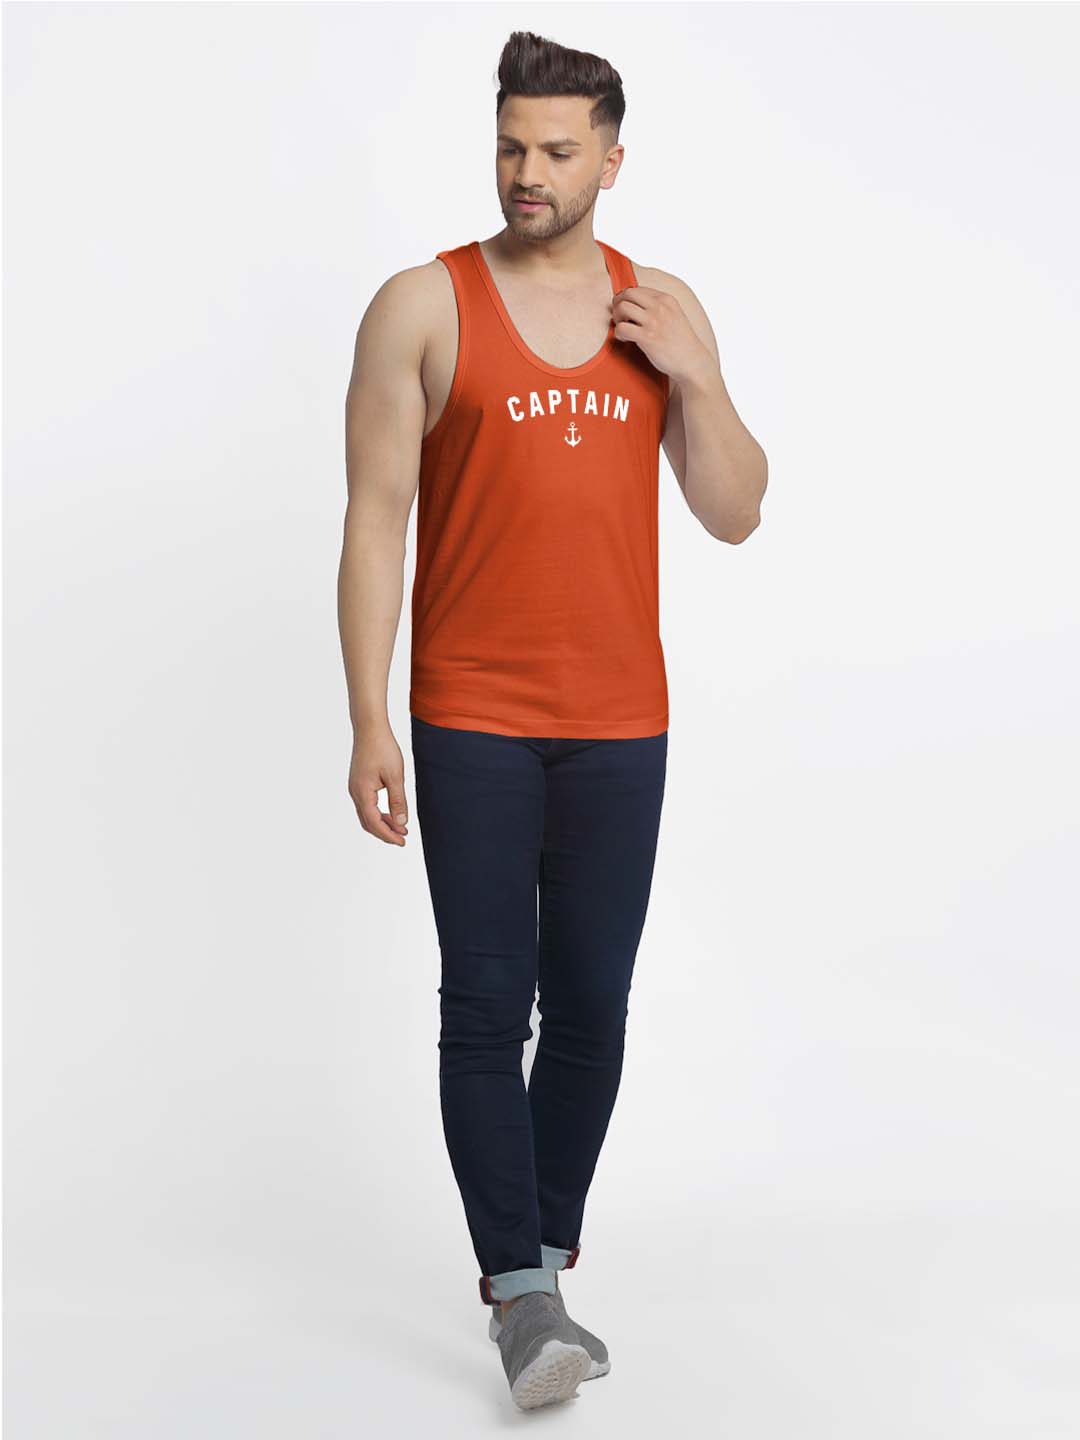 Mens's Captain Printed Innerwear Gym Vest - Friskers